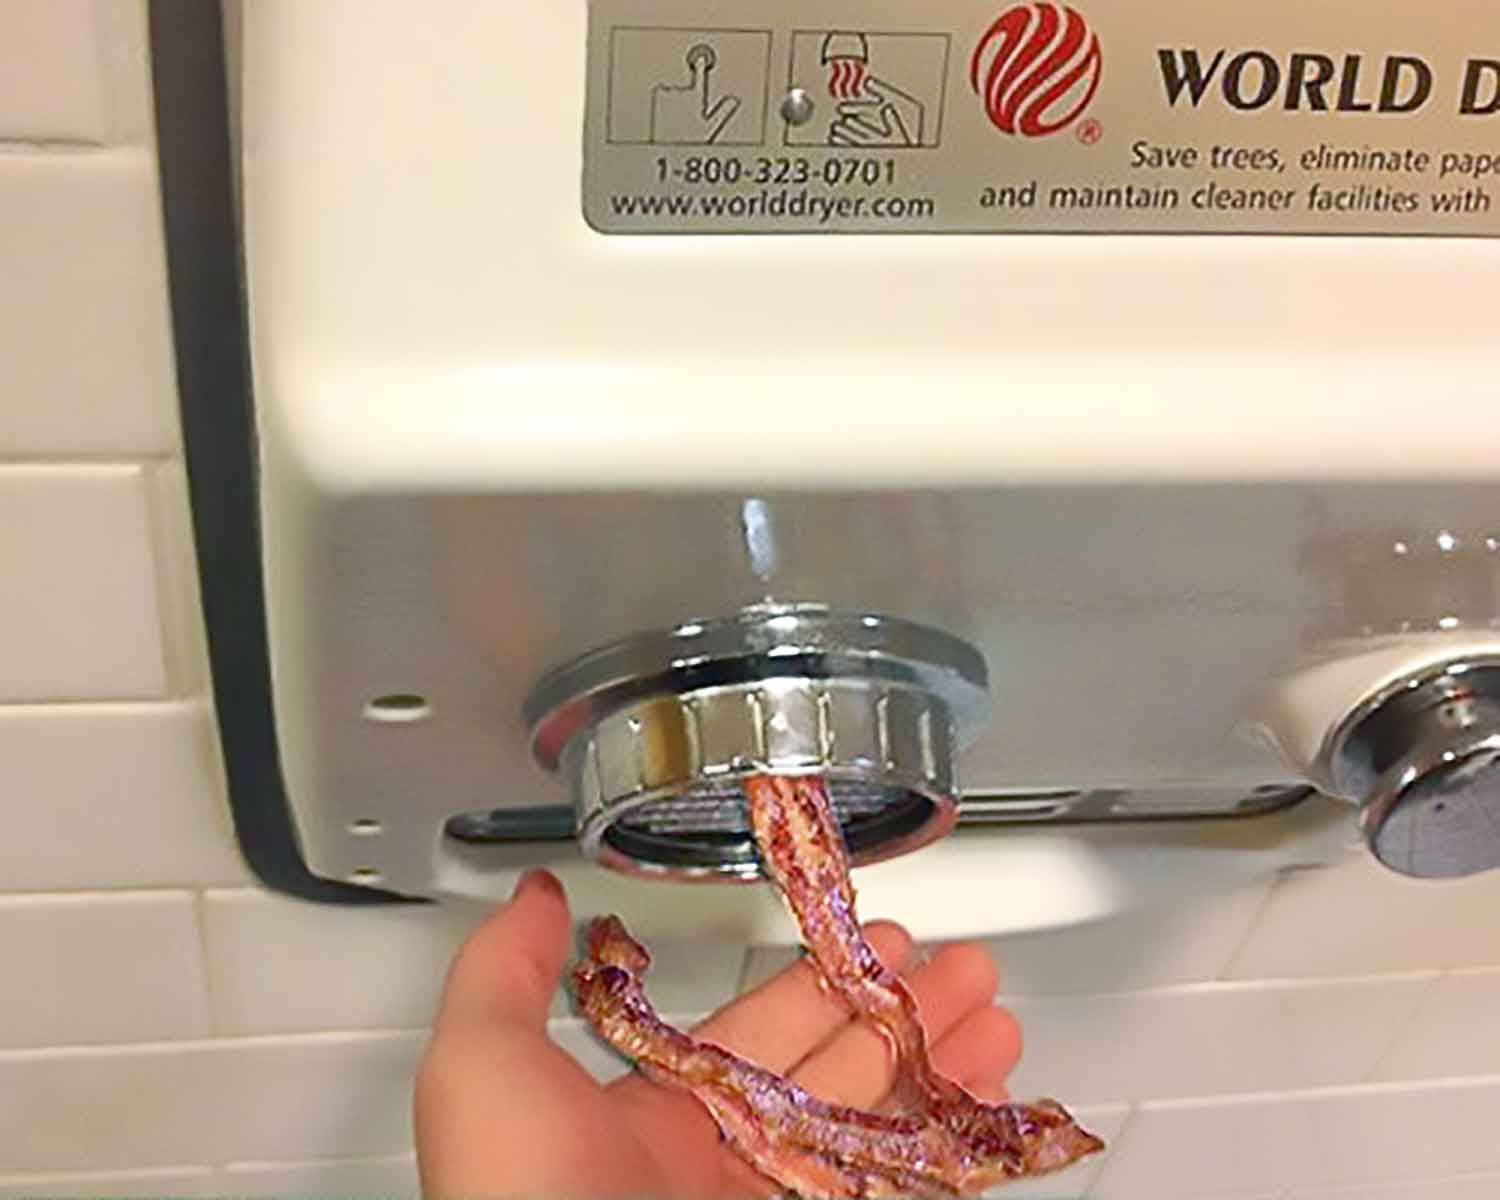 Crispy Bacon Vending Machine Dispenses Meat Treats in Men's Bathroom